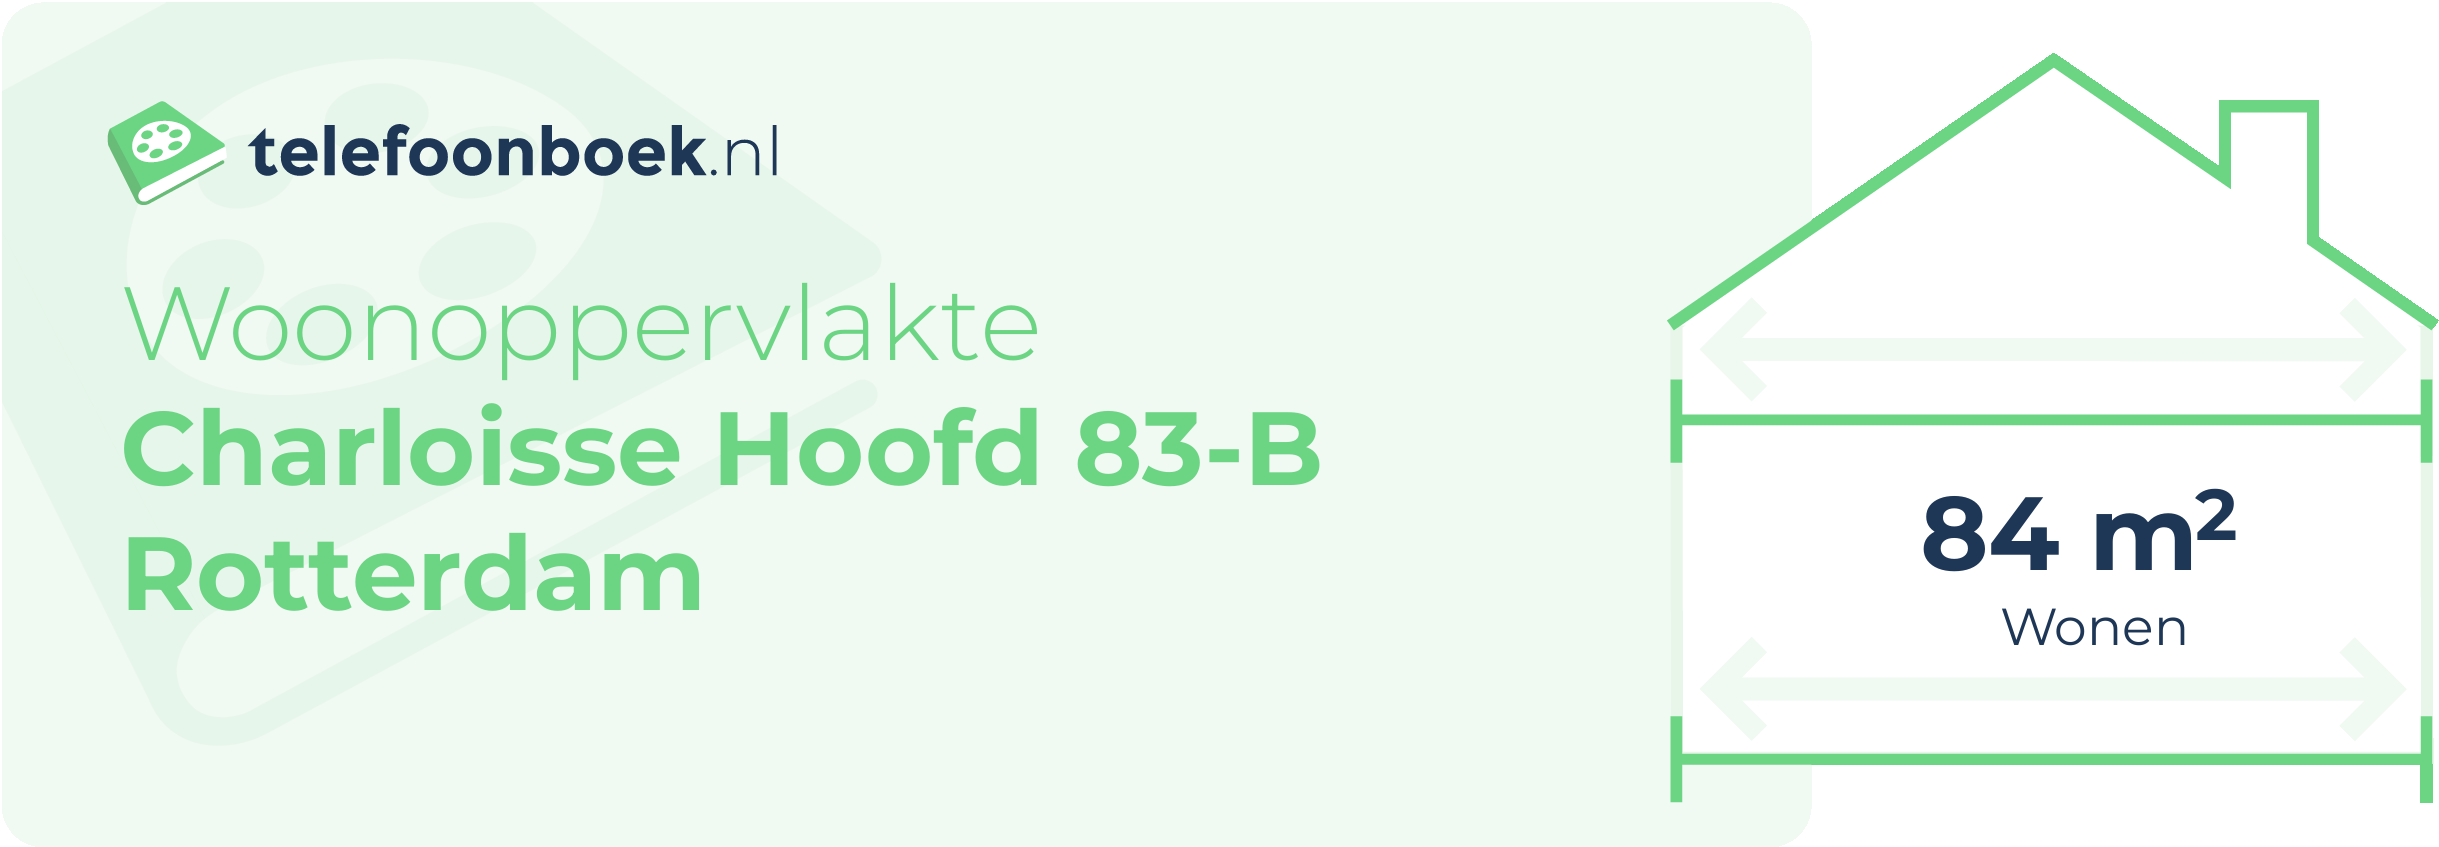 Woonoppervlakte Charloisse Hoofd 83-B Rotterdam